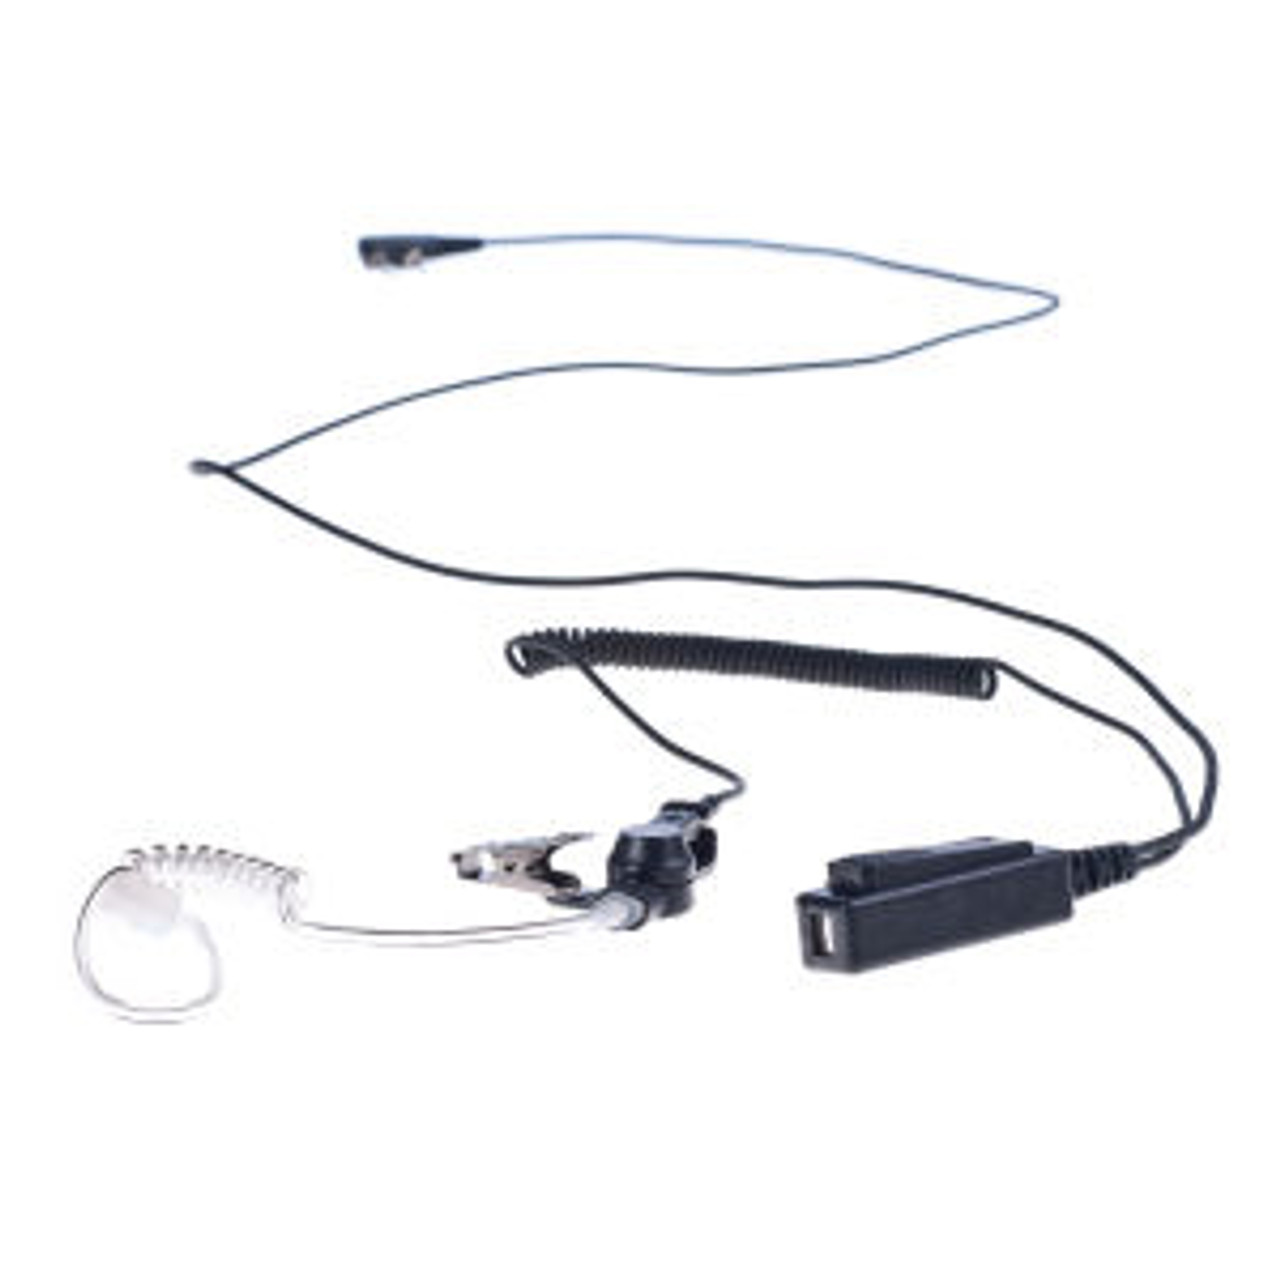 Kenwood NX-5400 1-Wire Surveillance Kit